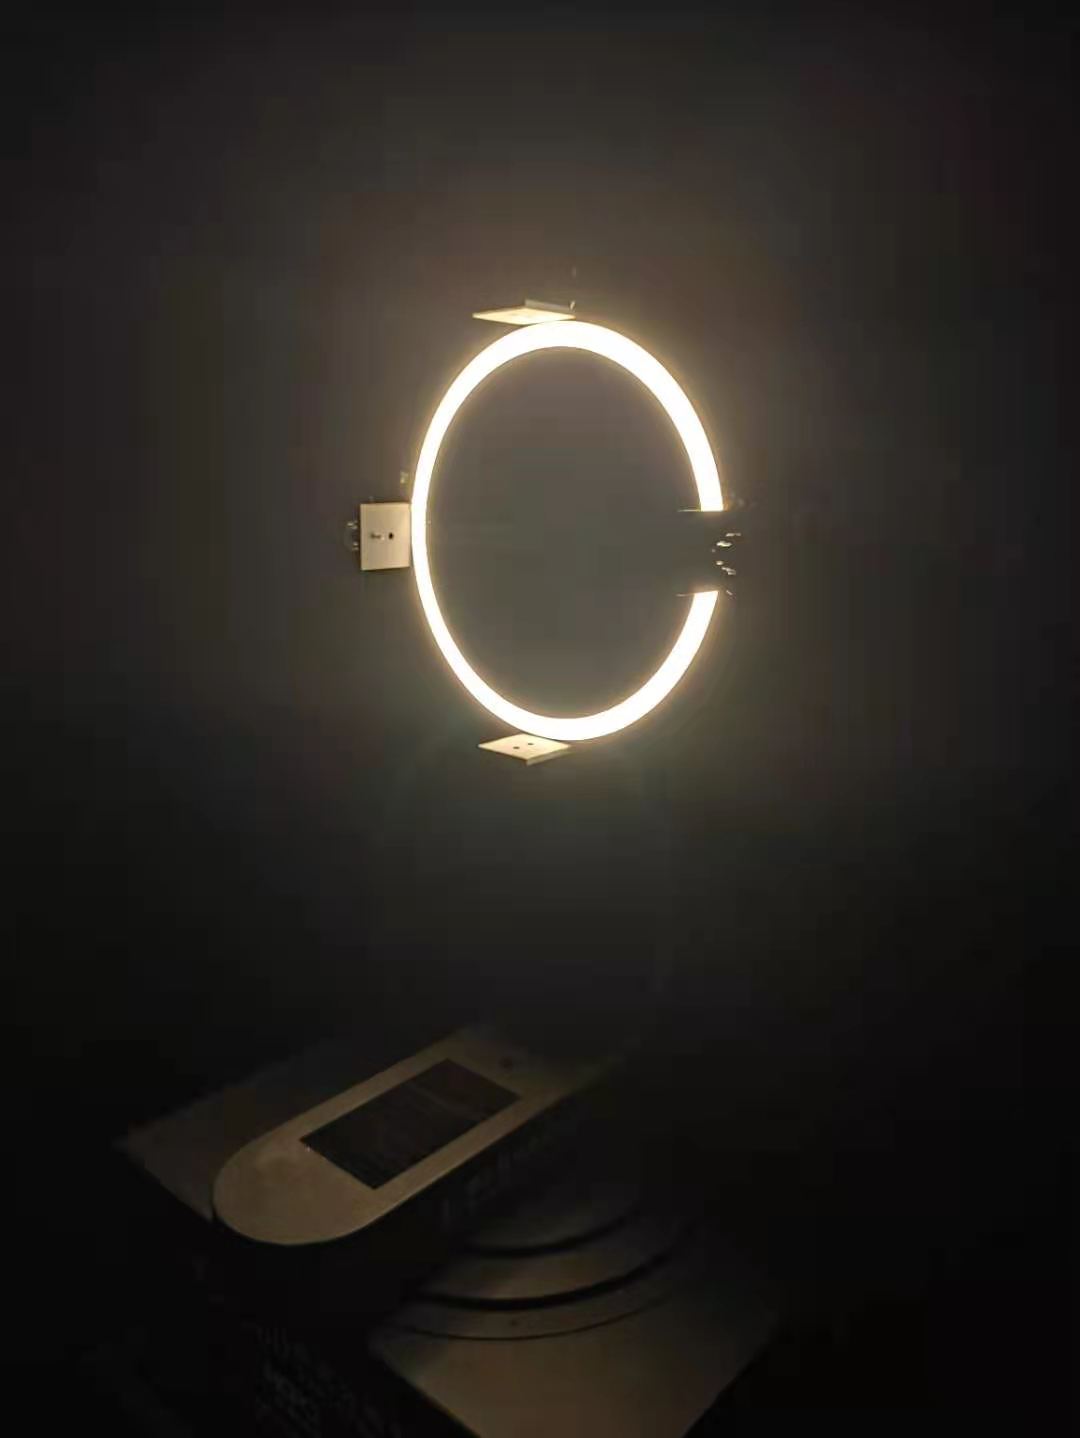 LED ring light IES test